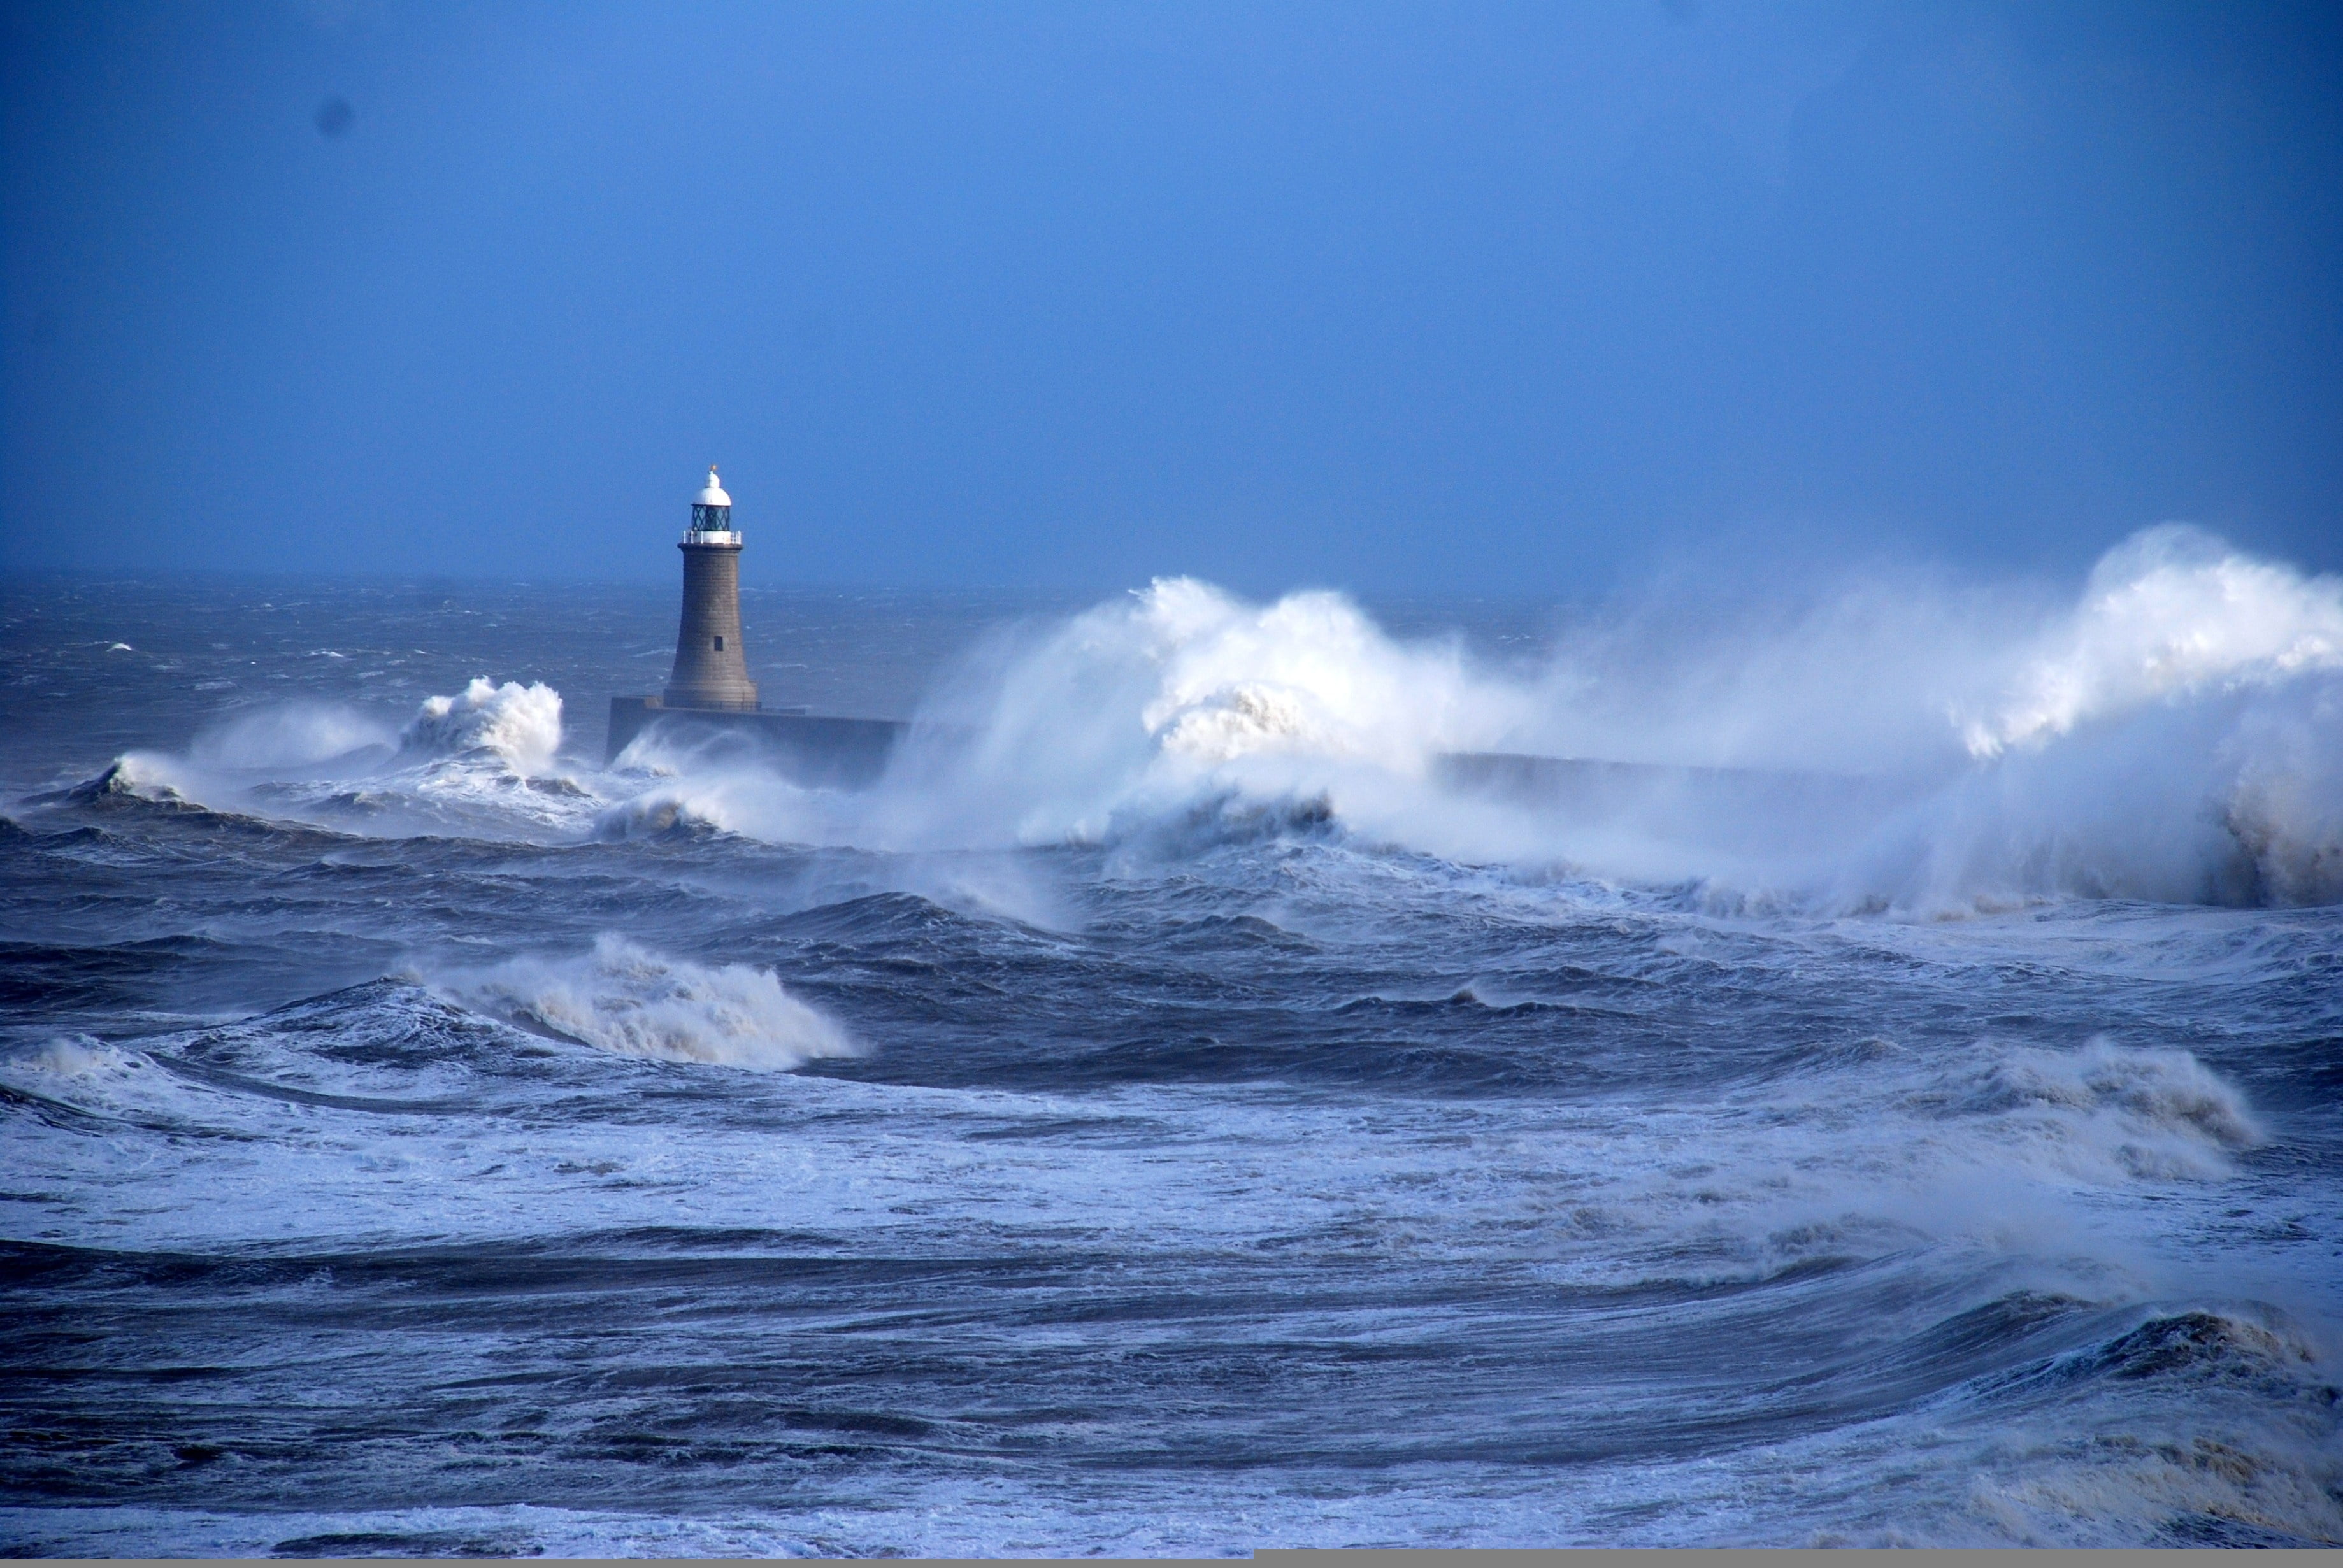 brown and white concrete lighthouse, beacon, sea, ocean, storm